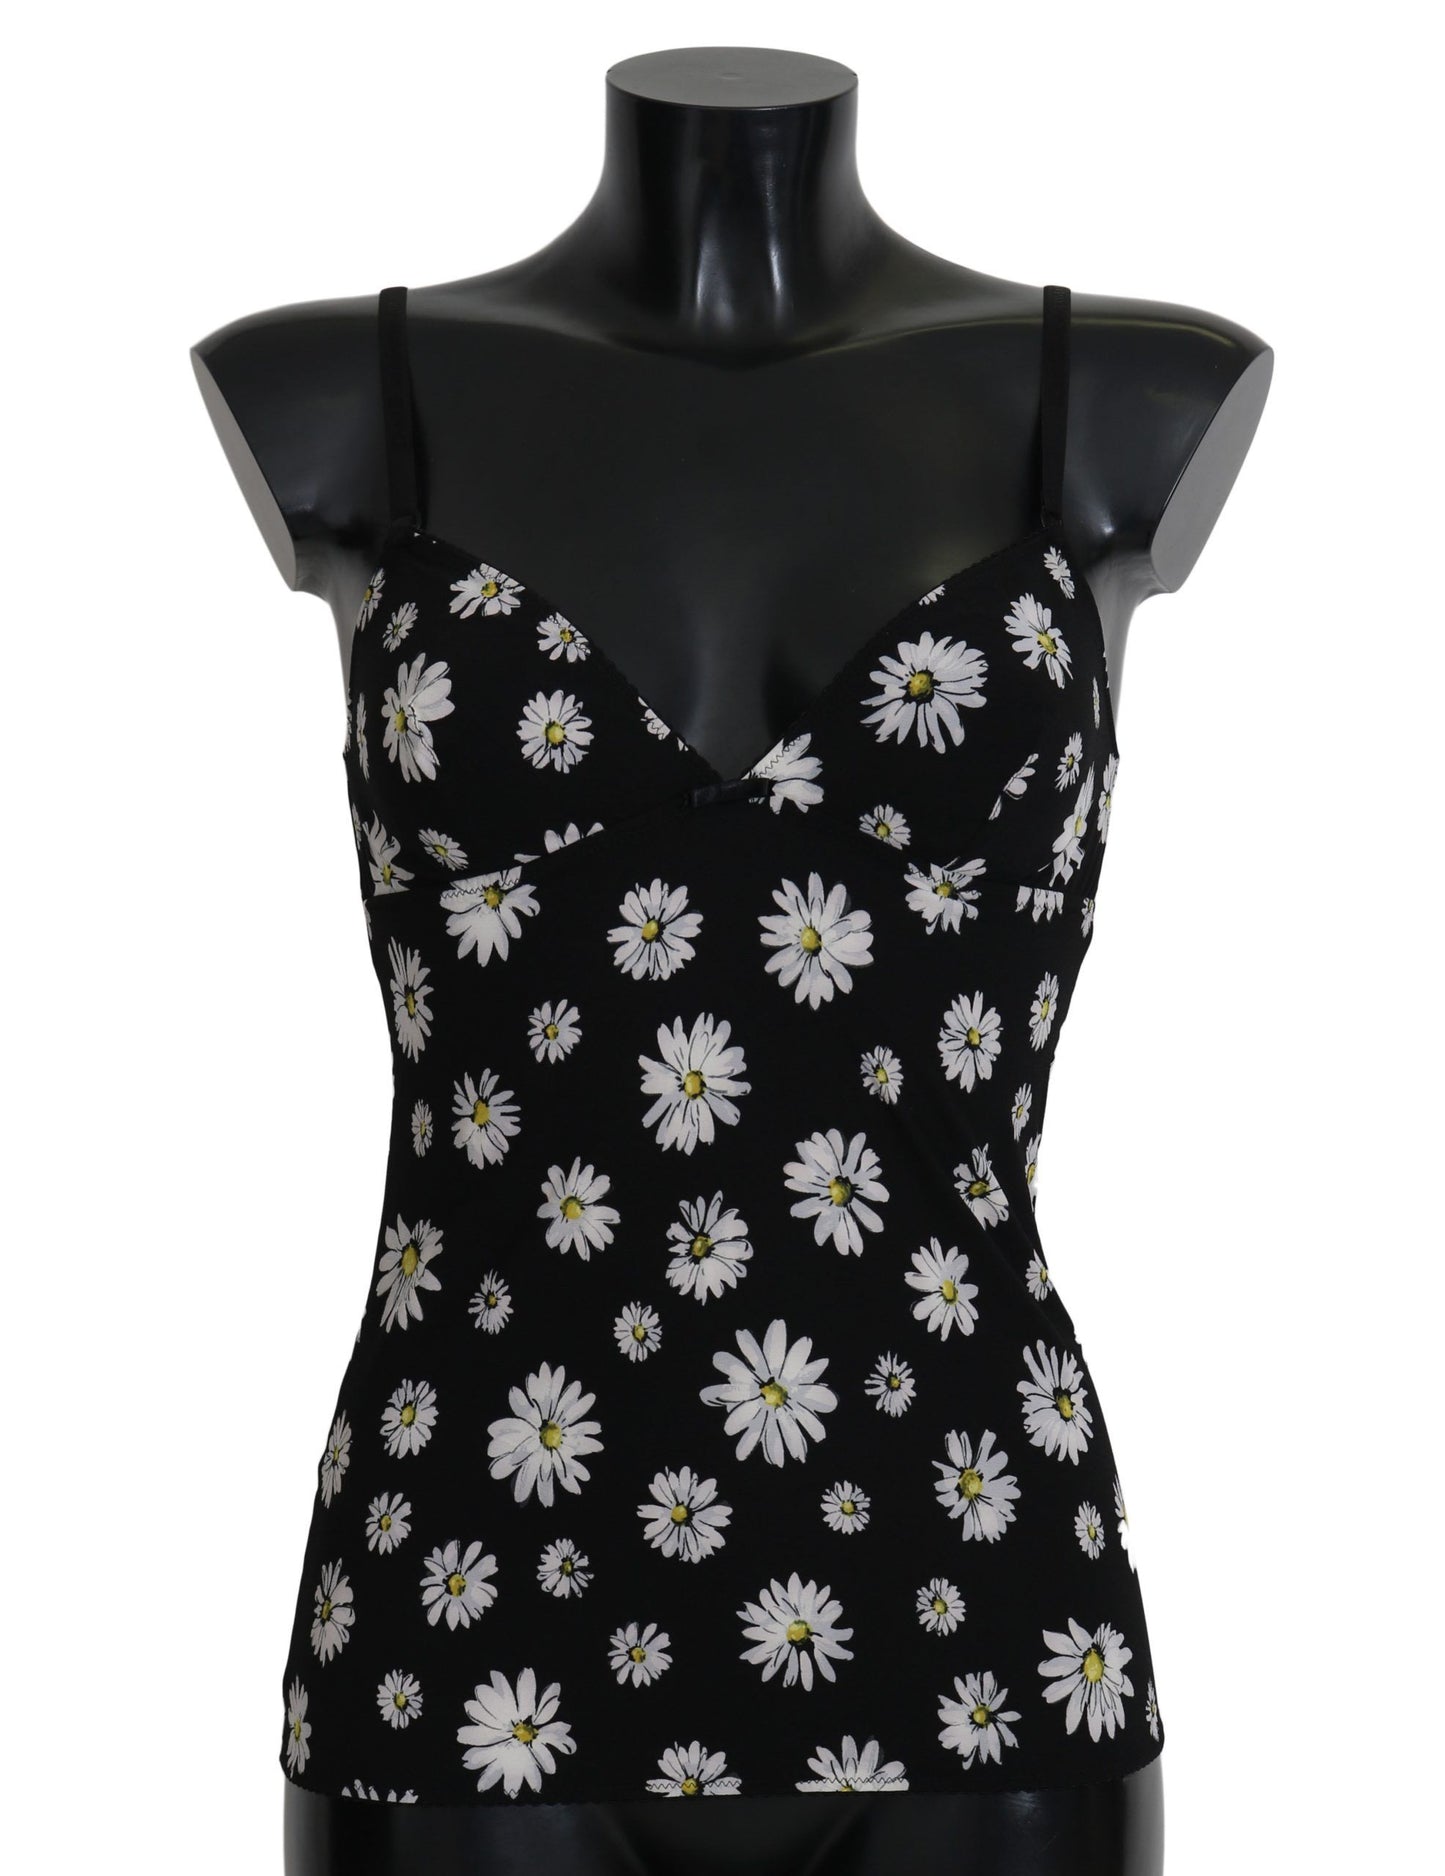 Dolce & Gabbana Black Daisy Print Dress Lingerie Chemisole